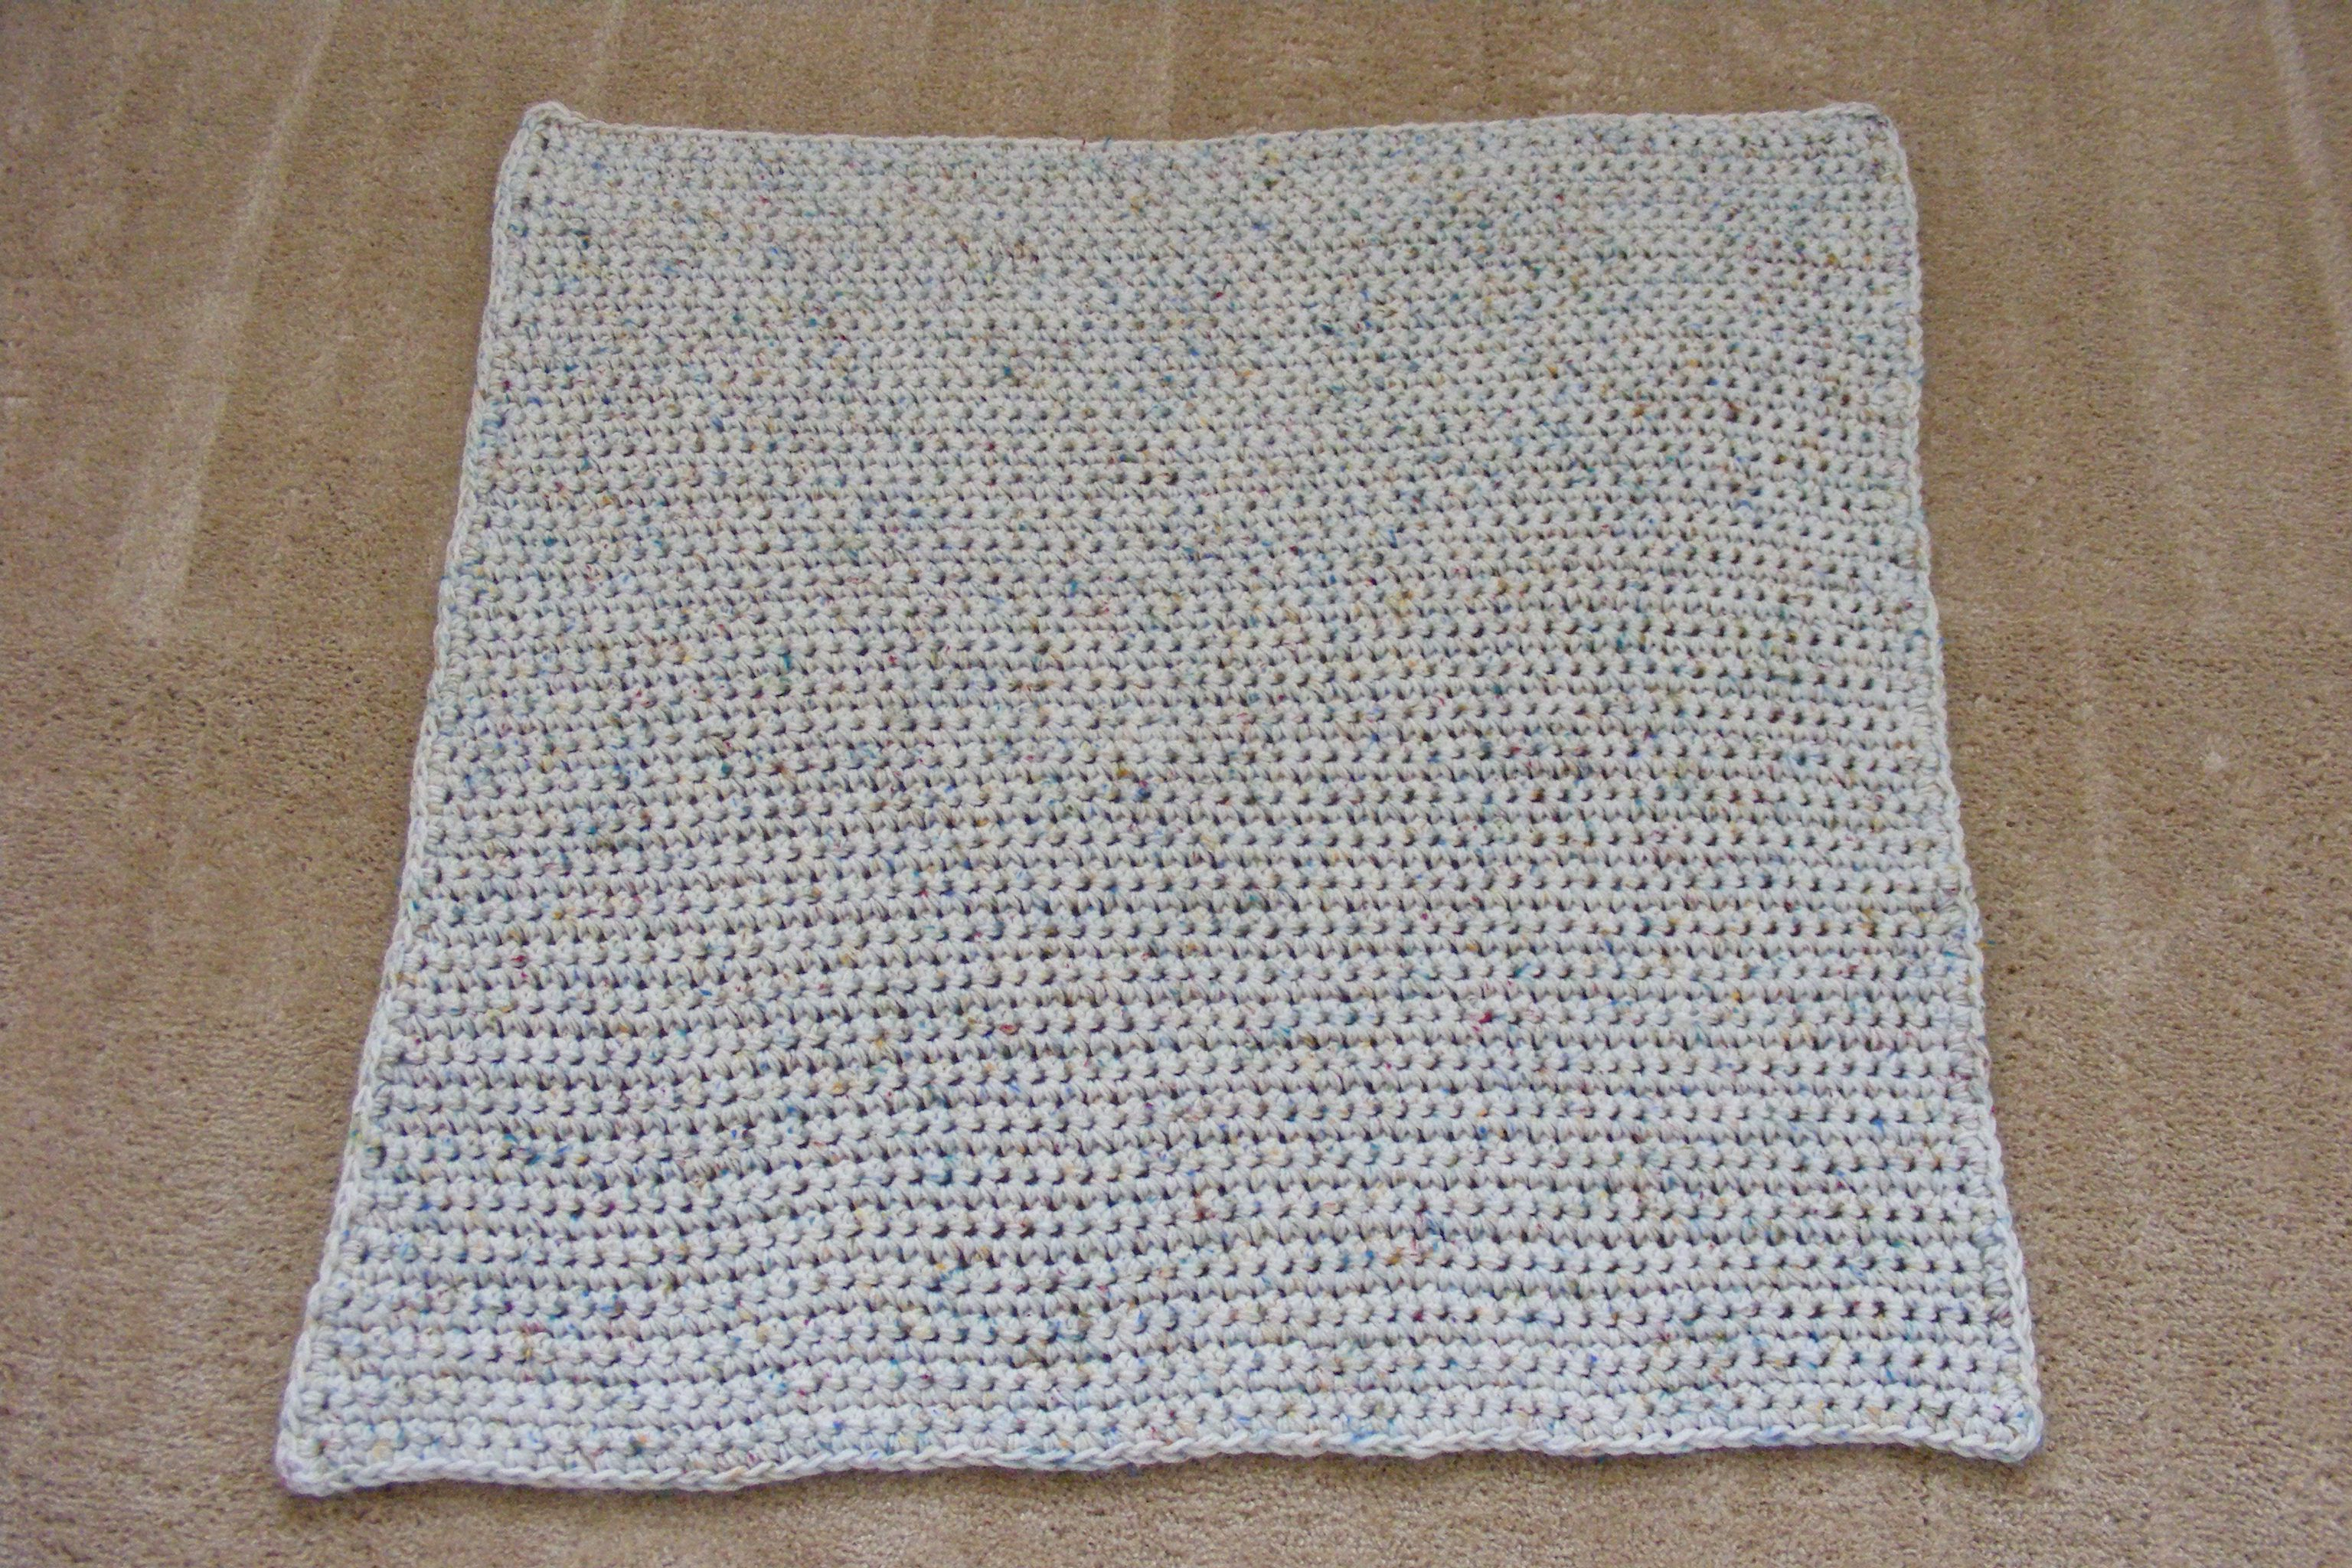 Crochet Blanket Pattern For Beginners 15 Adorable Crochet Ba Blanket Patterns